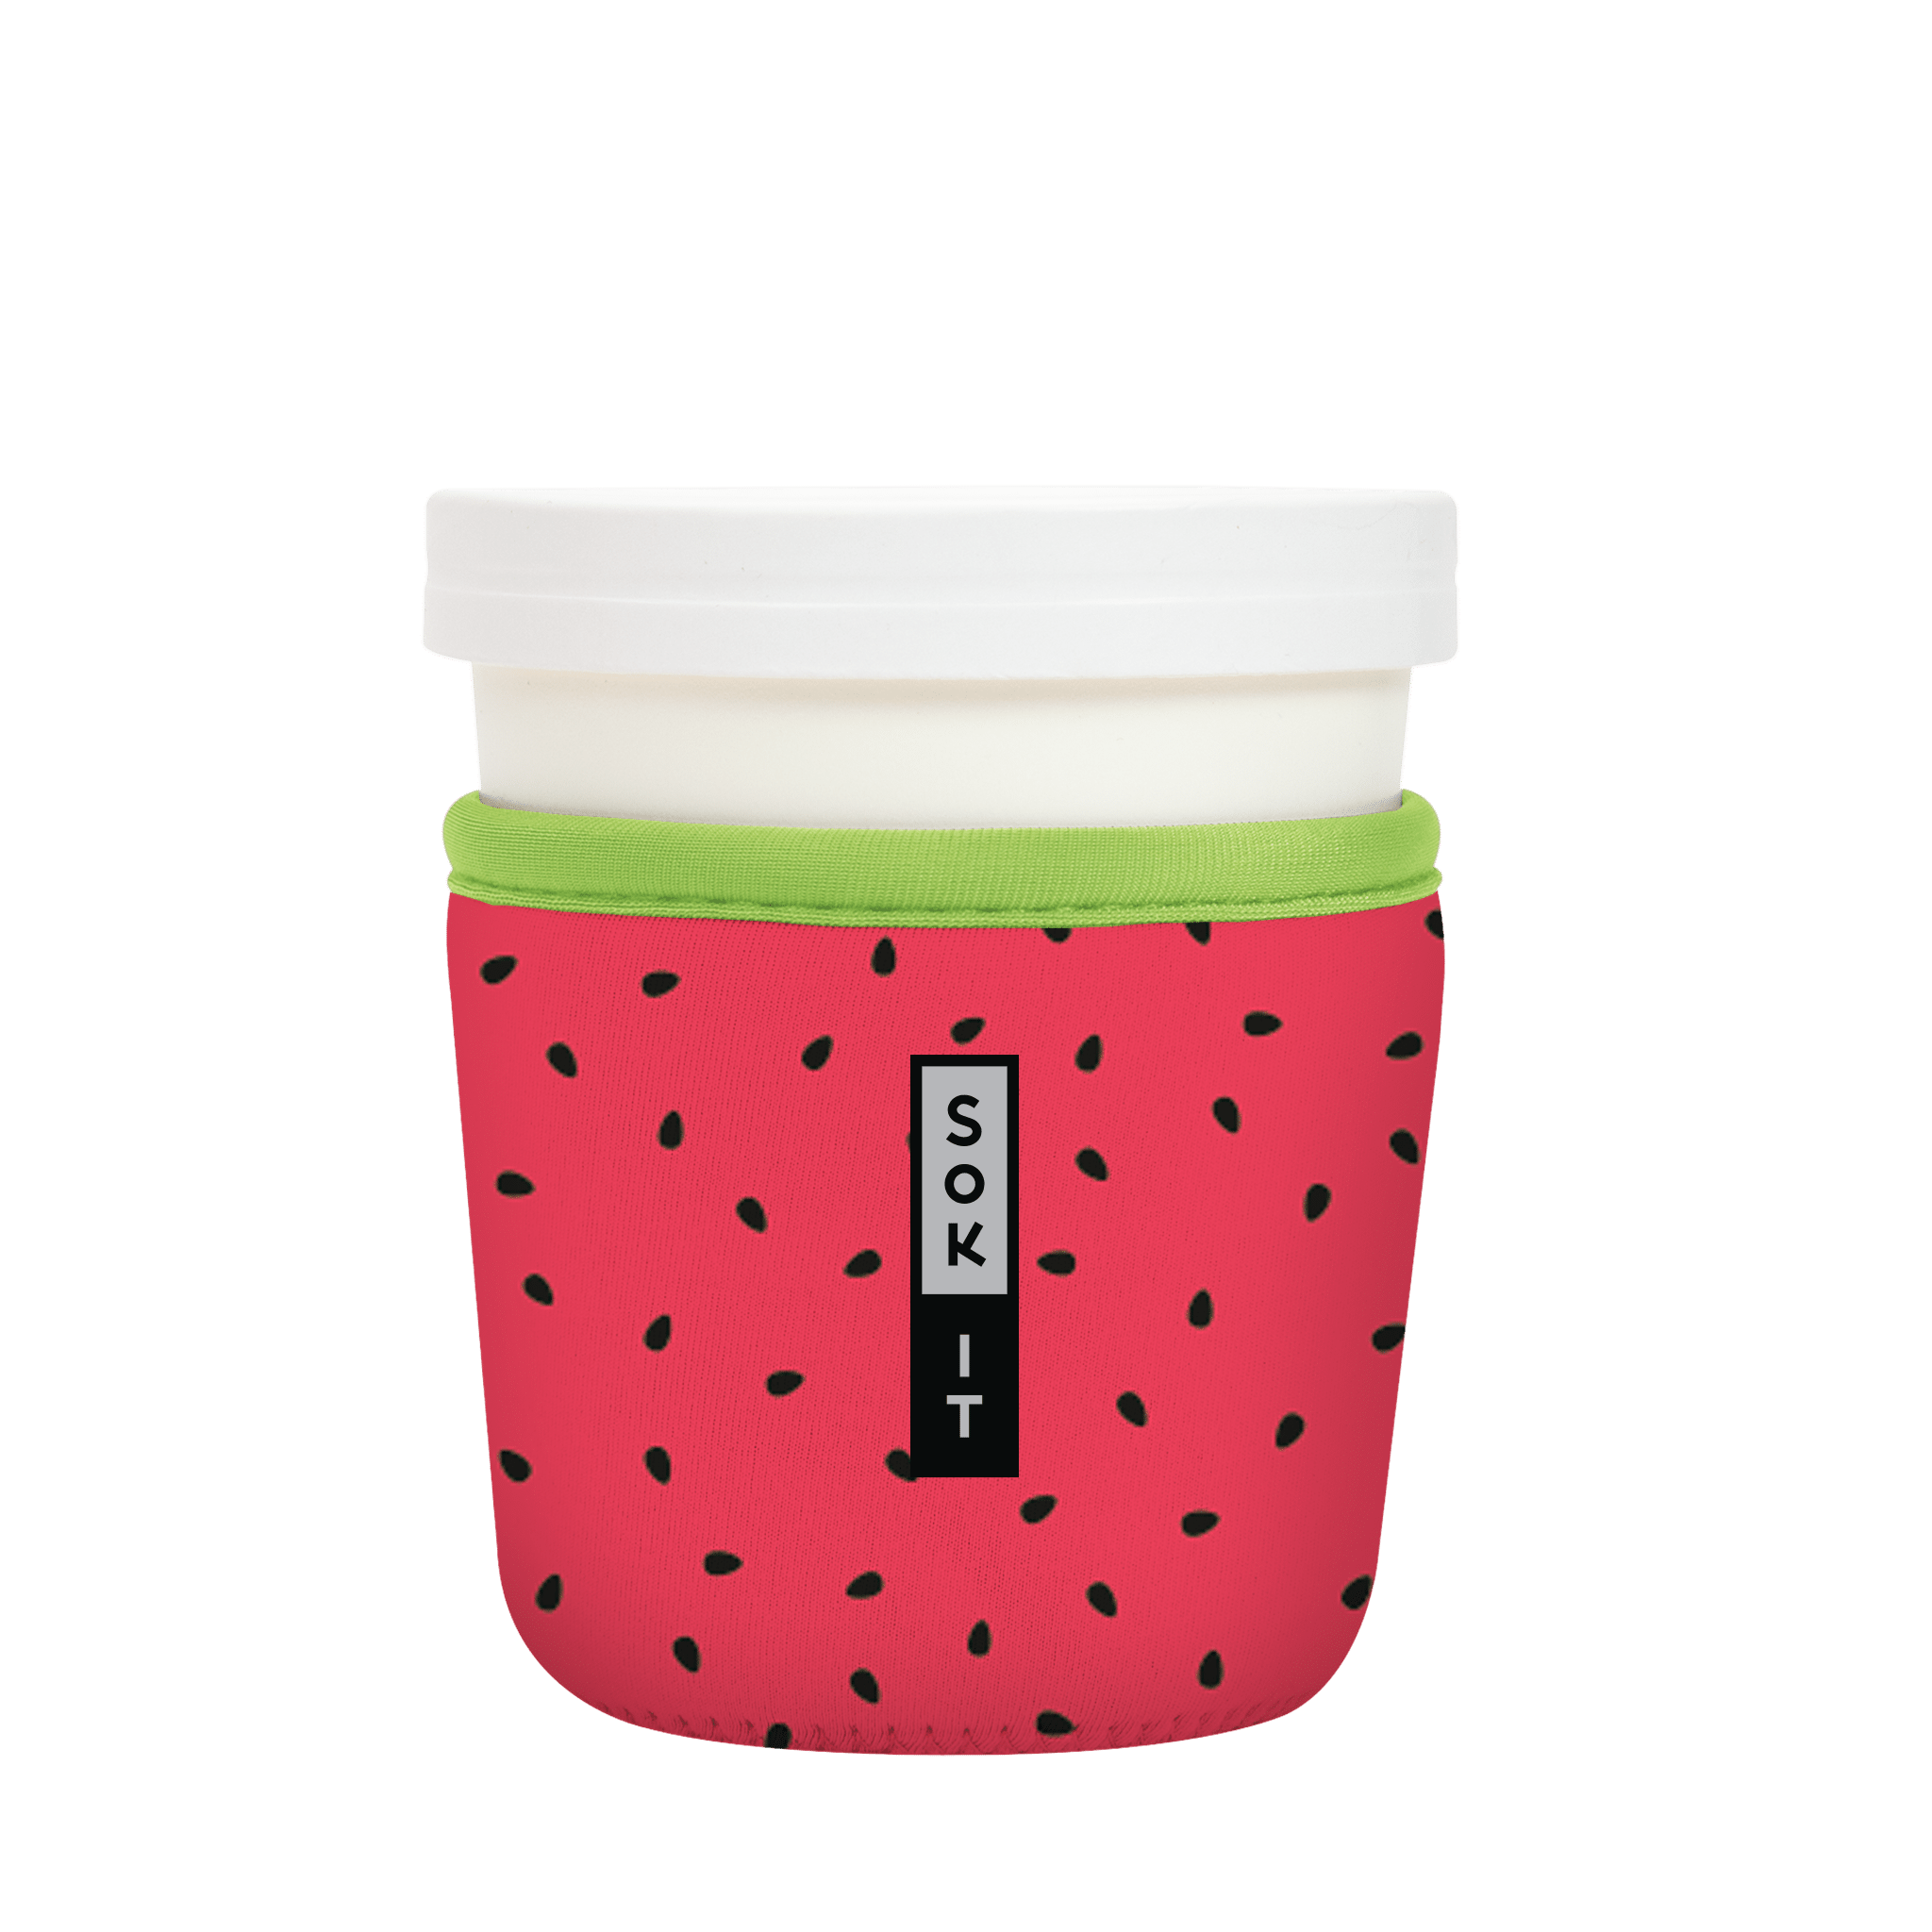 IceCreamSok Watermelon Sugar 16oz Ice Cream Pint